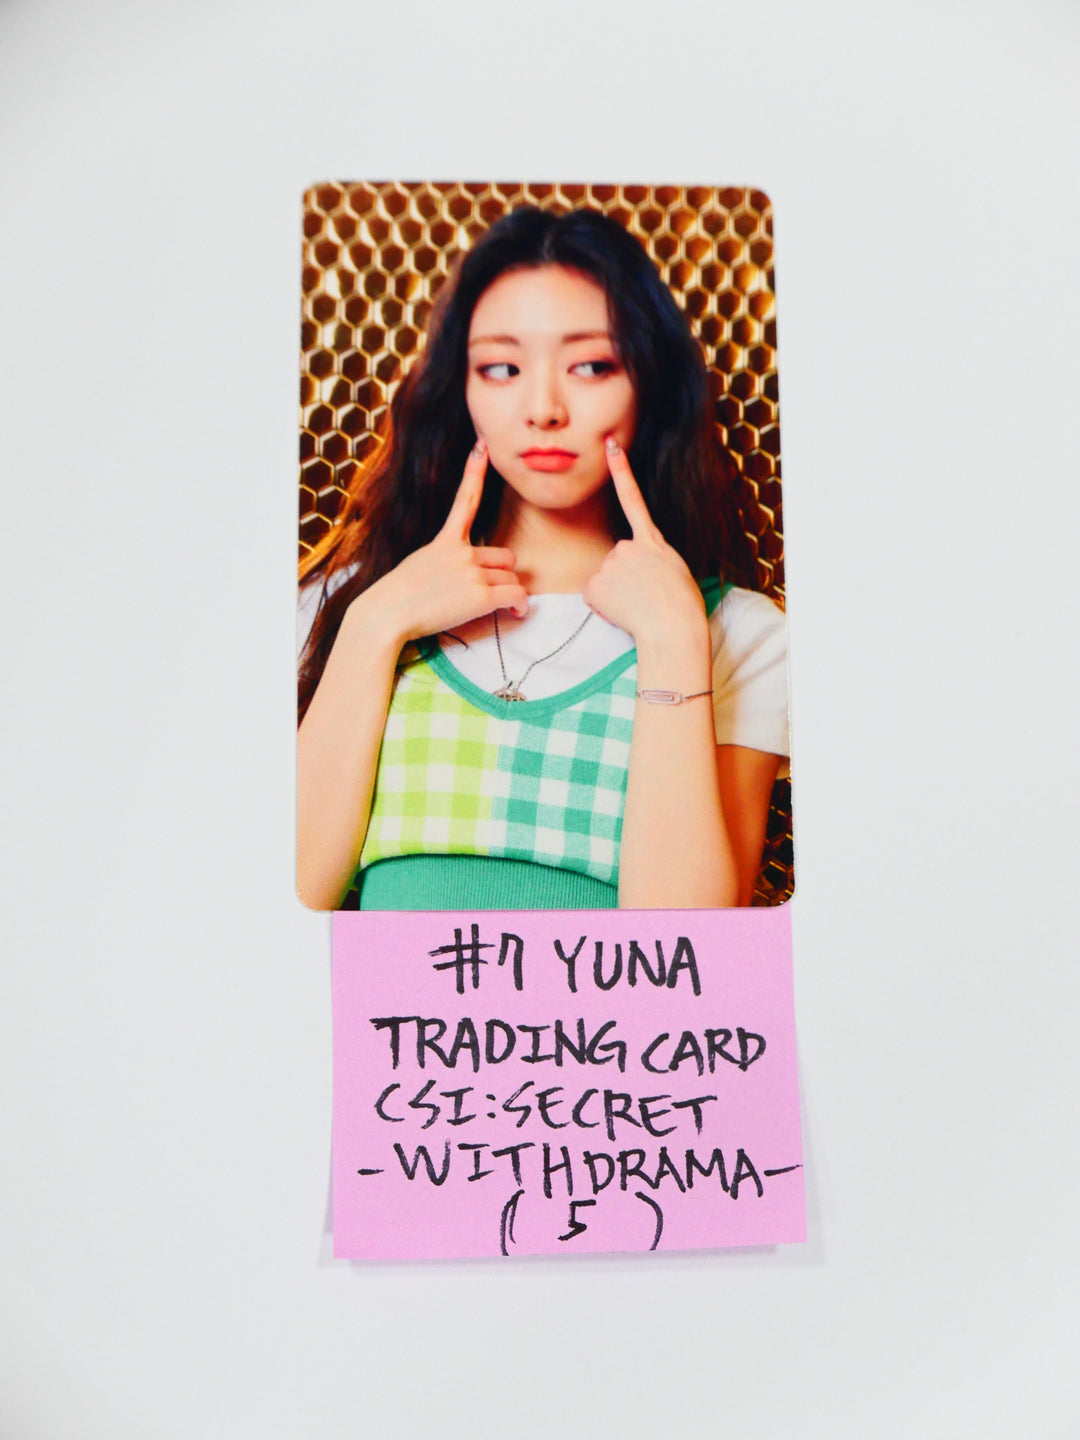 Itzy 'CSI Code Name Secret' - Trading Card Photocard (2)